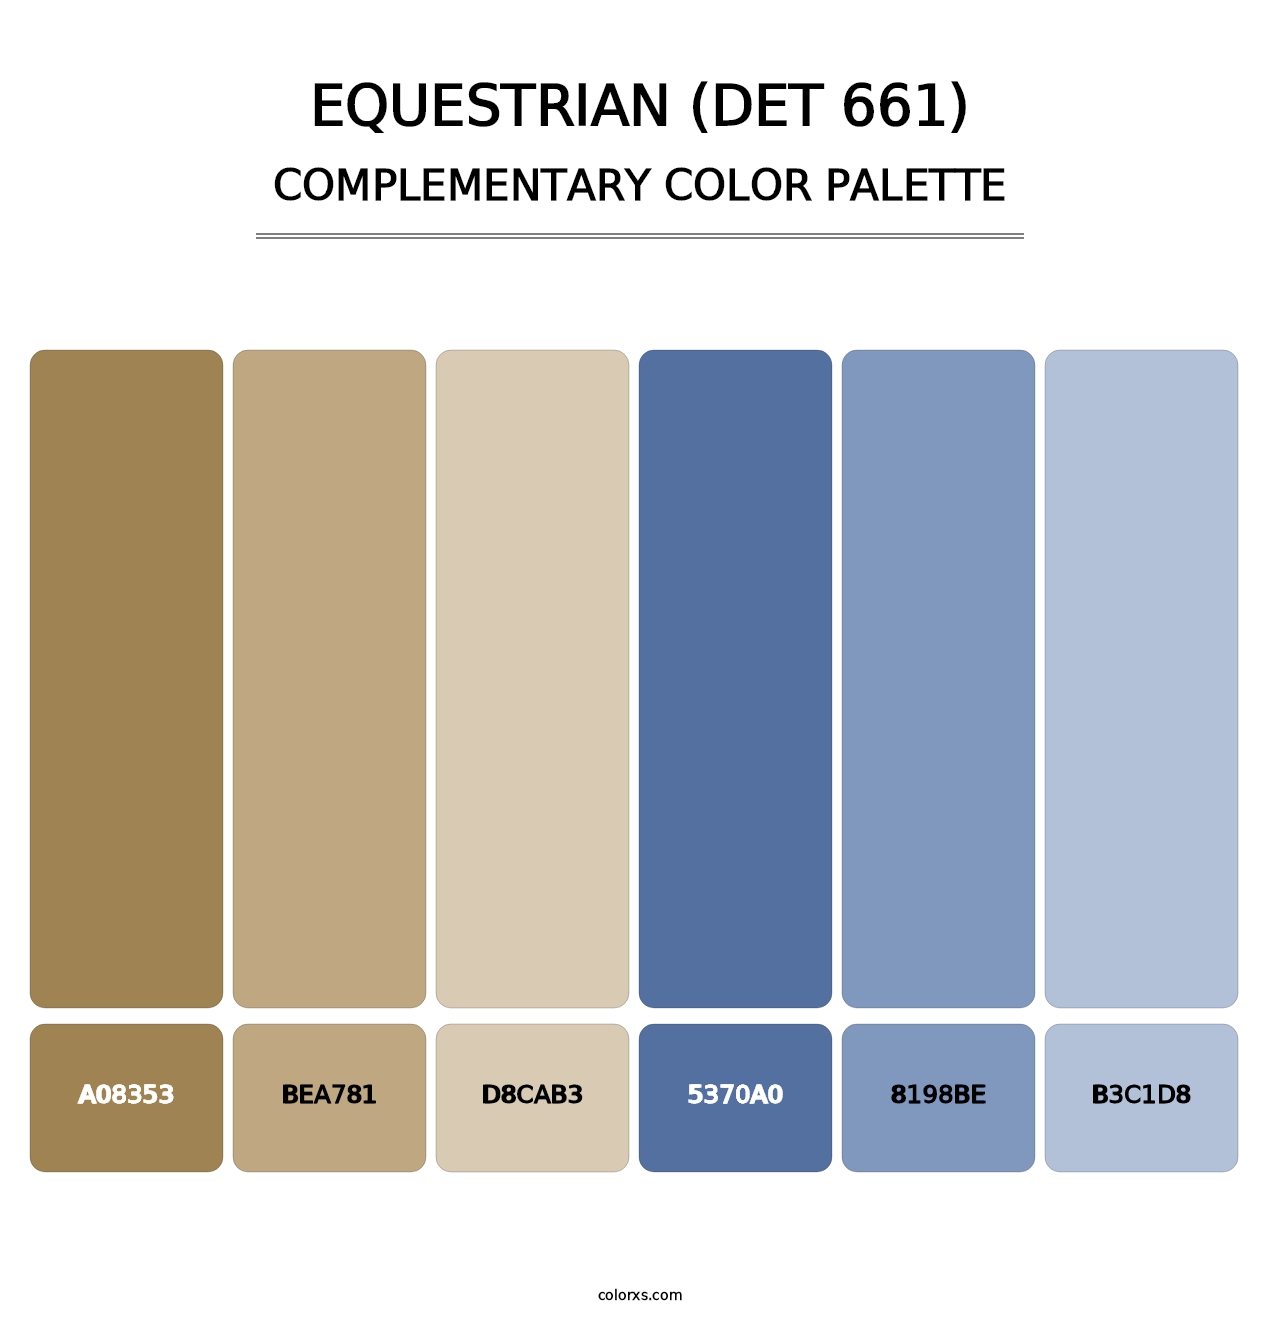 Equestrian (DET 661) - Complementary Color Palette